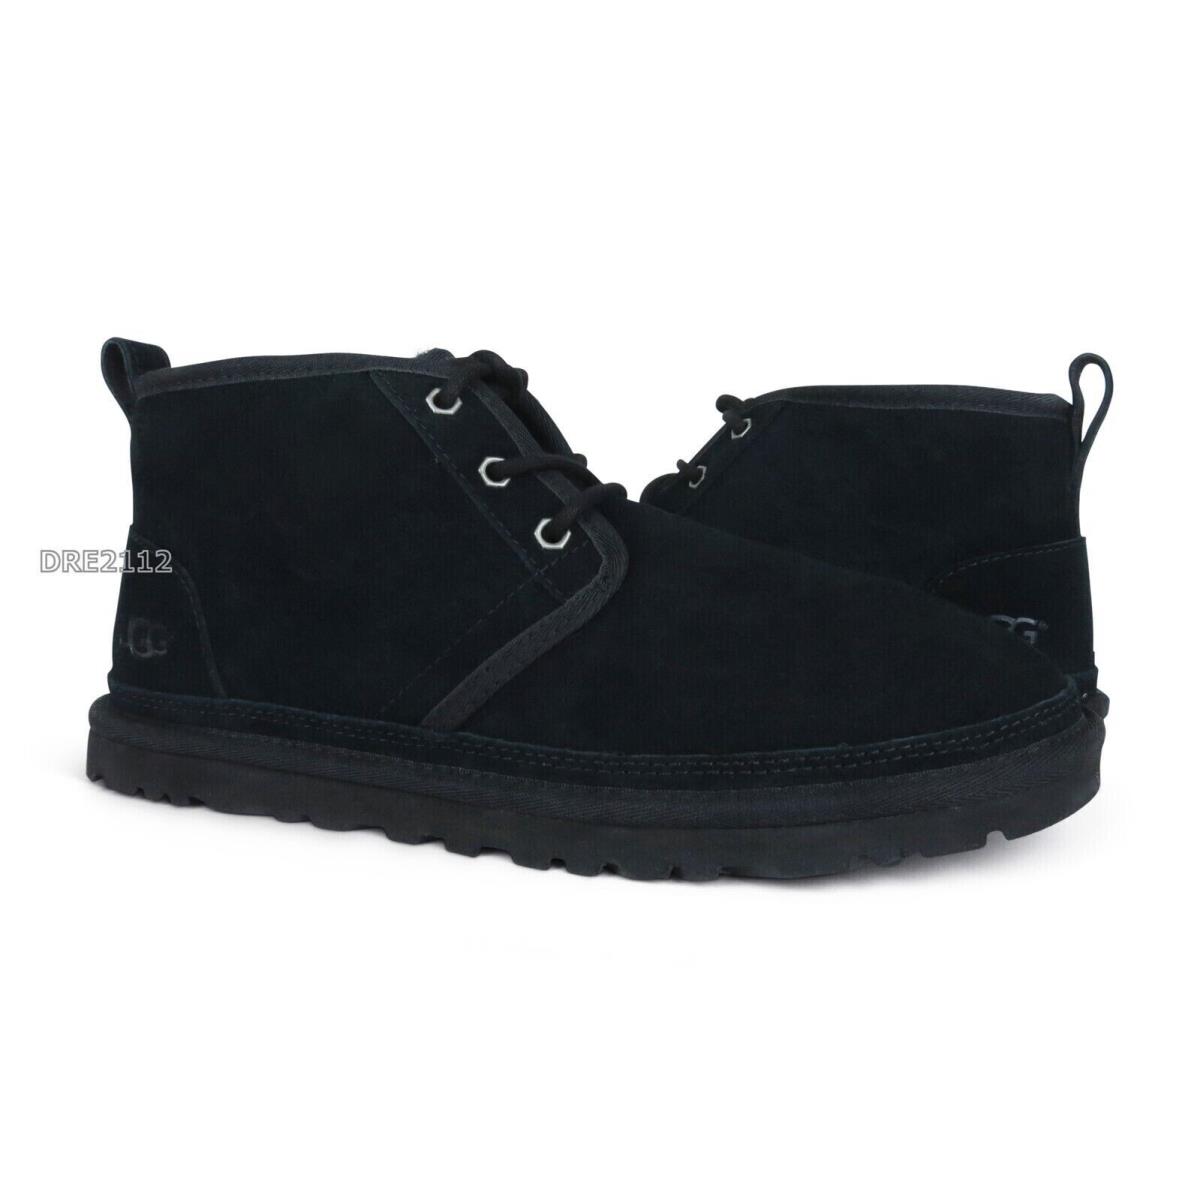 Ugg Neumel Black Suede Fur Shoes Womens Size 8 -nib - Black